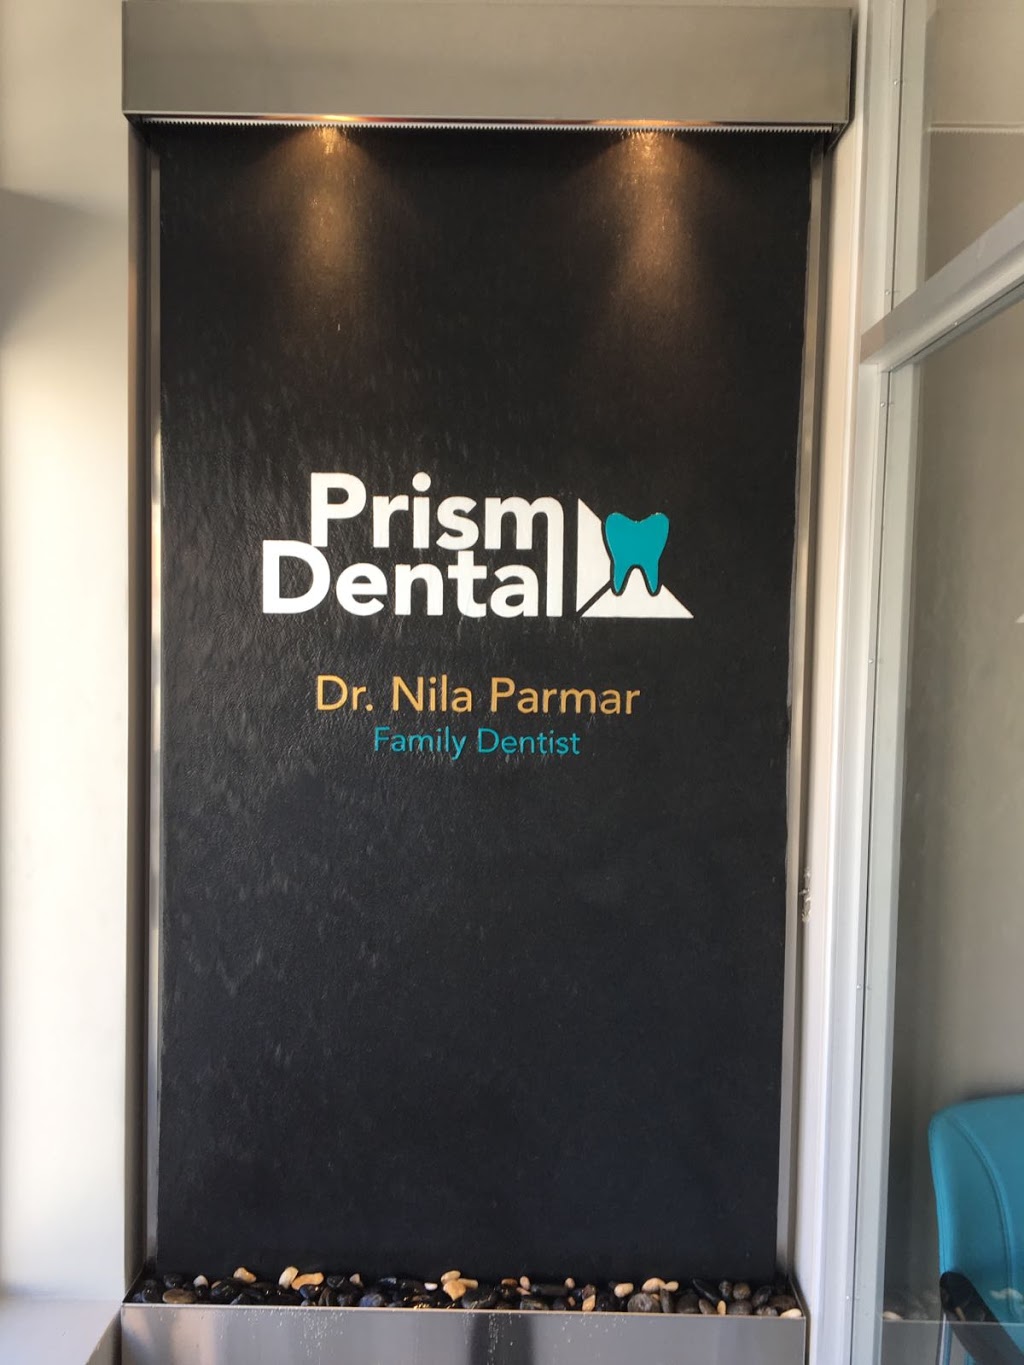 Prism Dental | 80 Maritime Ontario Blvd #41, Brampton, ON L6S 0E7, Canada | Phone: (647) 336-8478